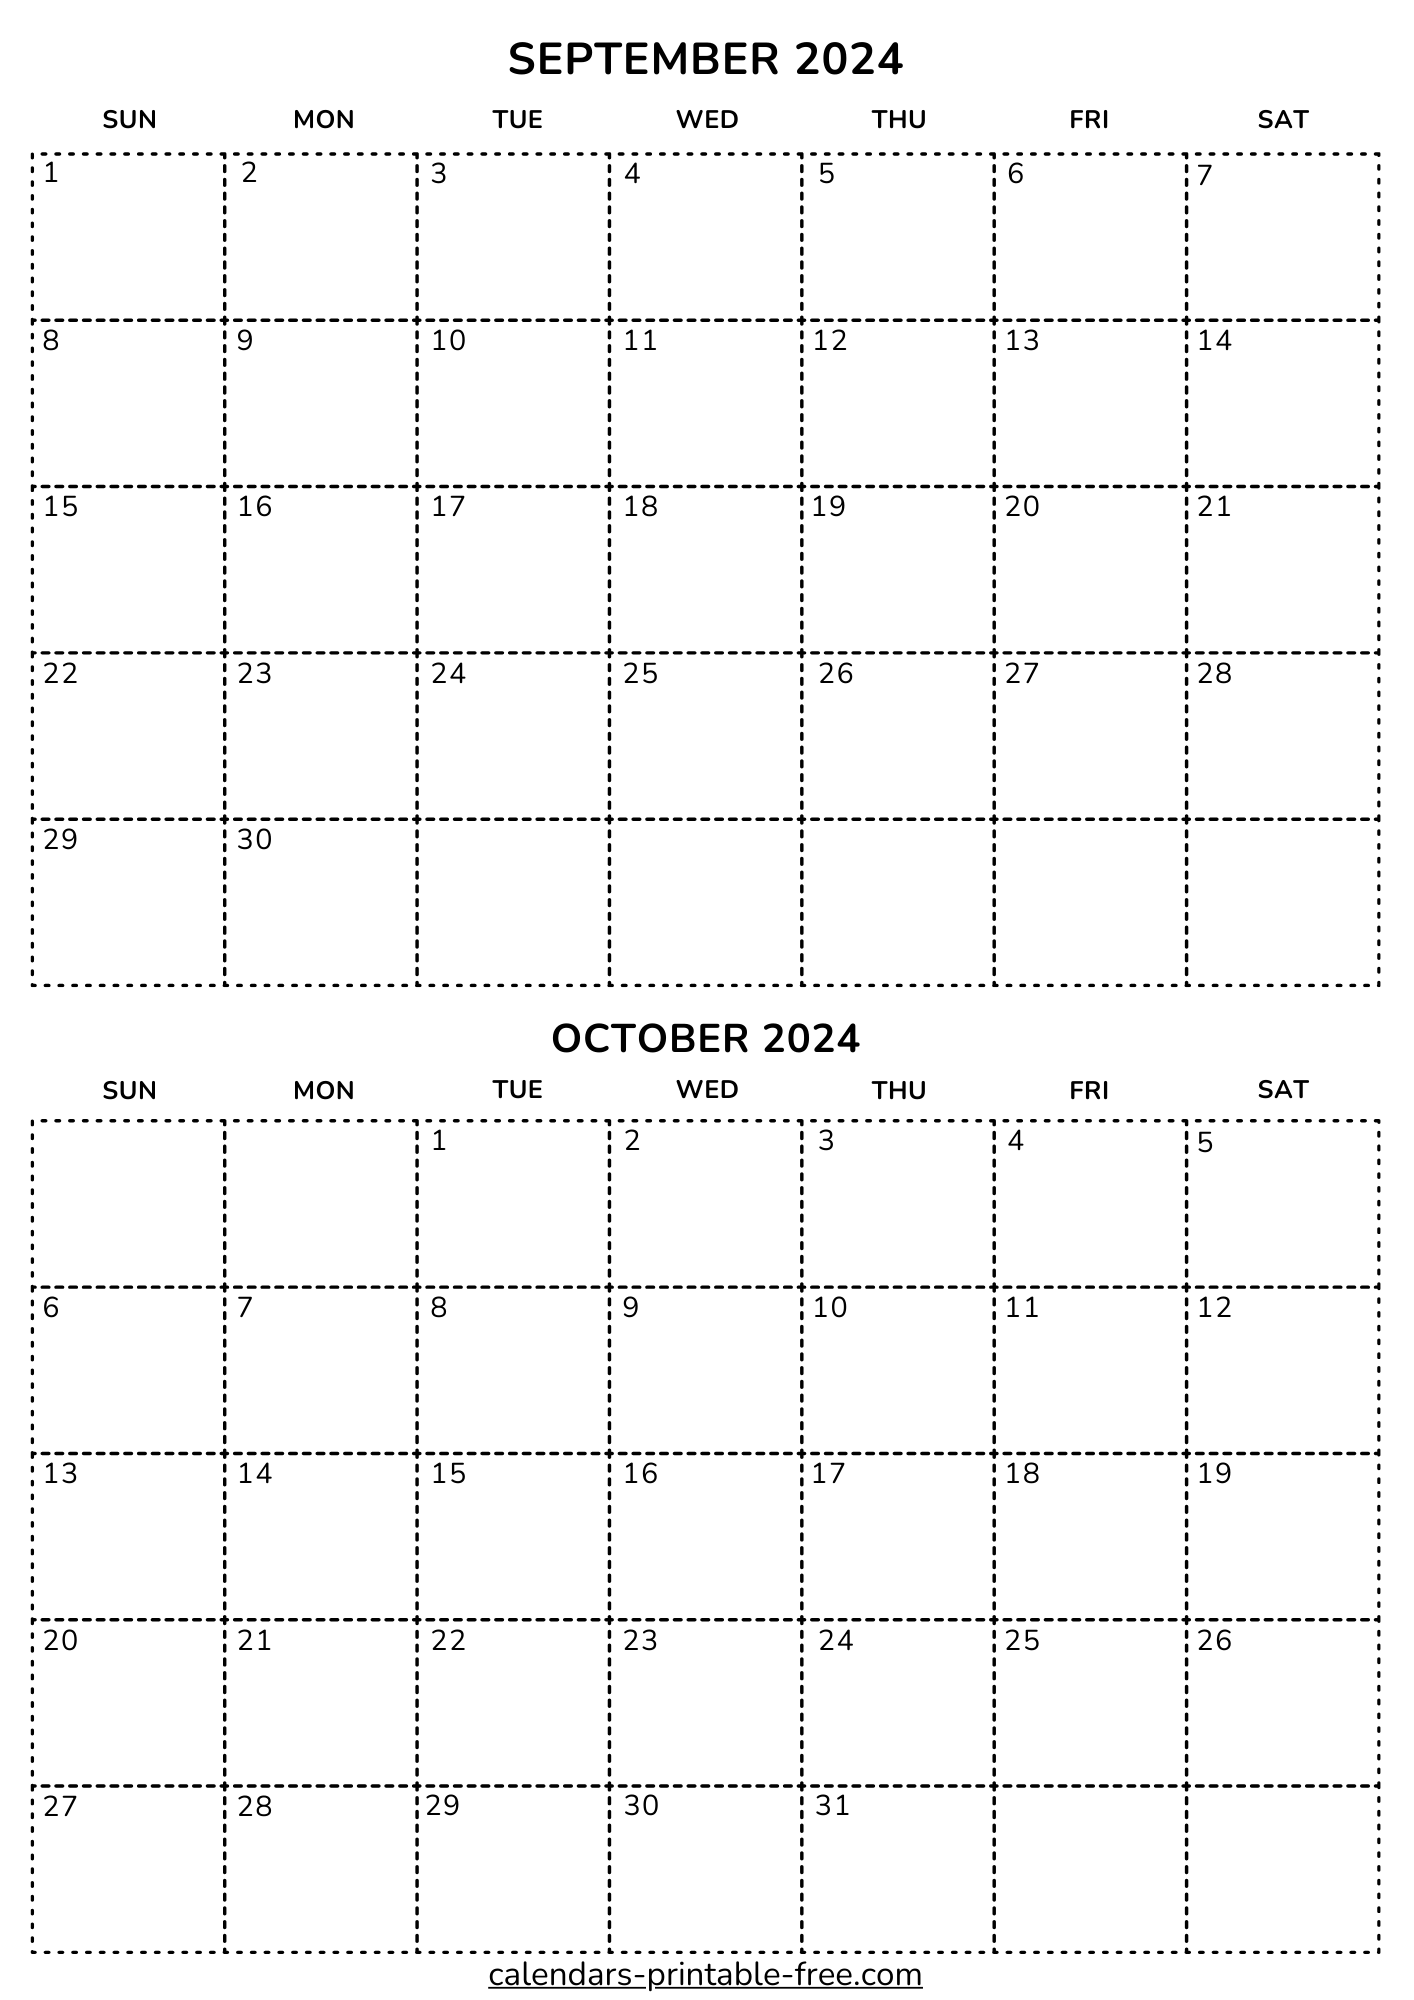 September and October 2024 Calendar Printable Free, image